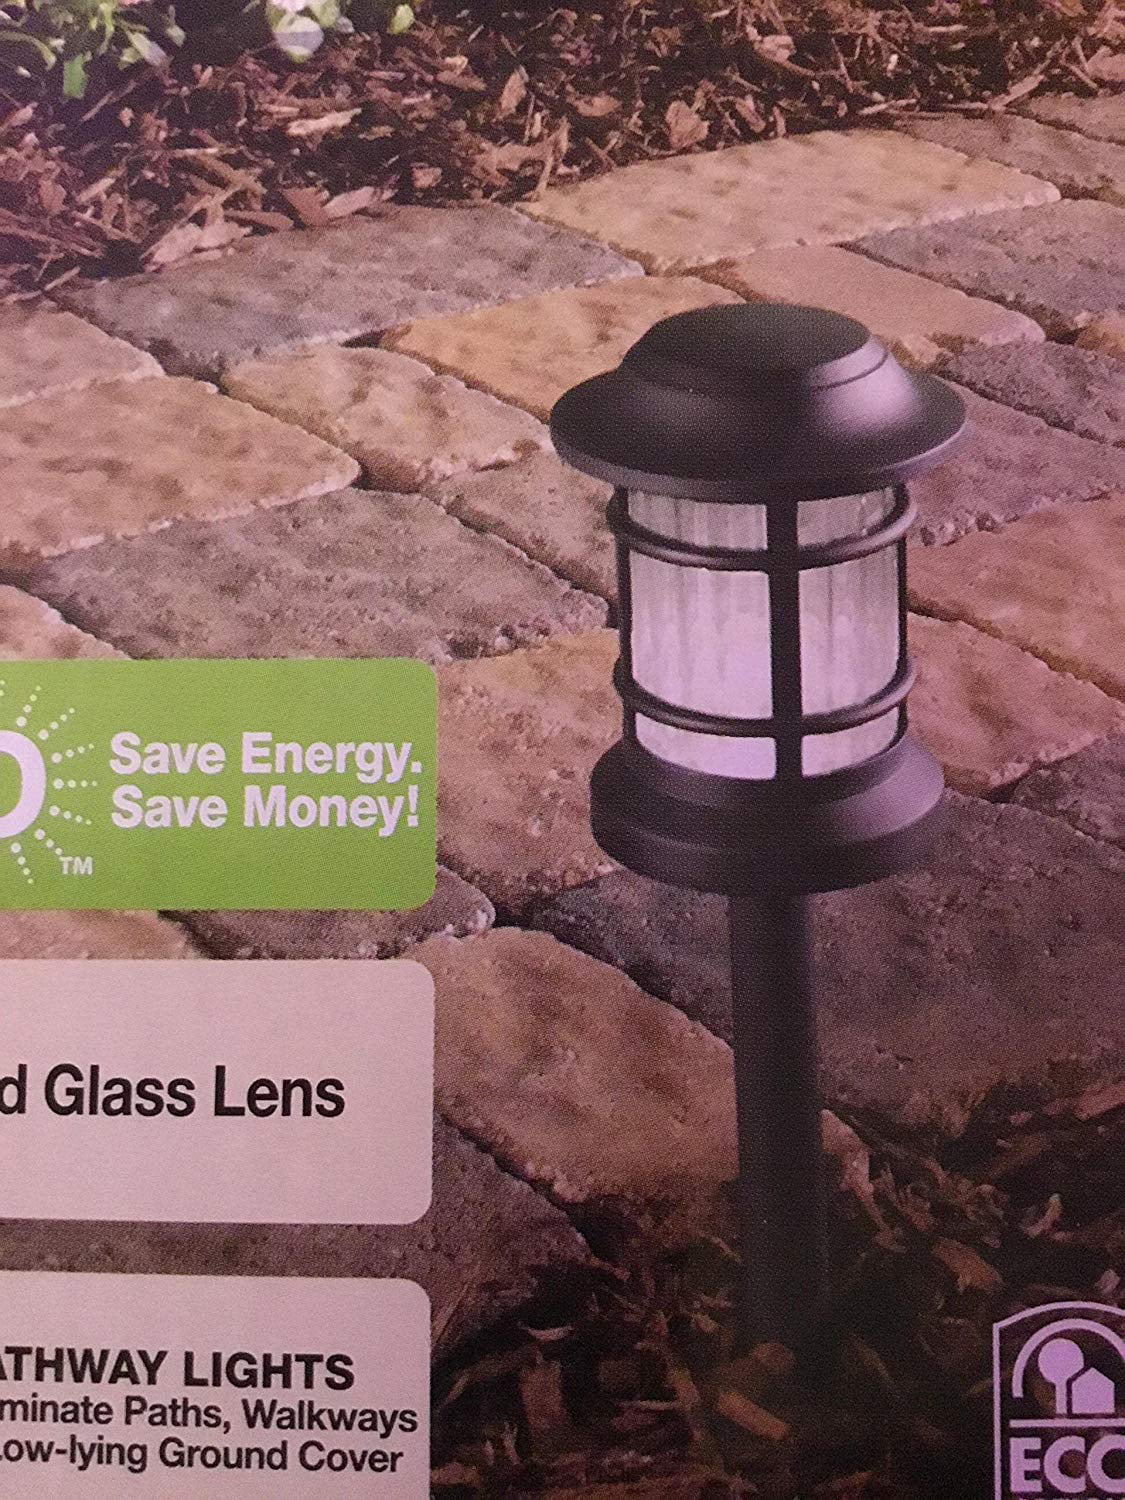 Details about   15" Black Metal Cage Low Voltage LED Landscape Light Glass Lens Garden Decor 